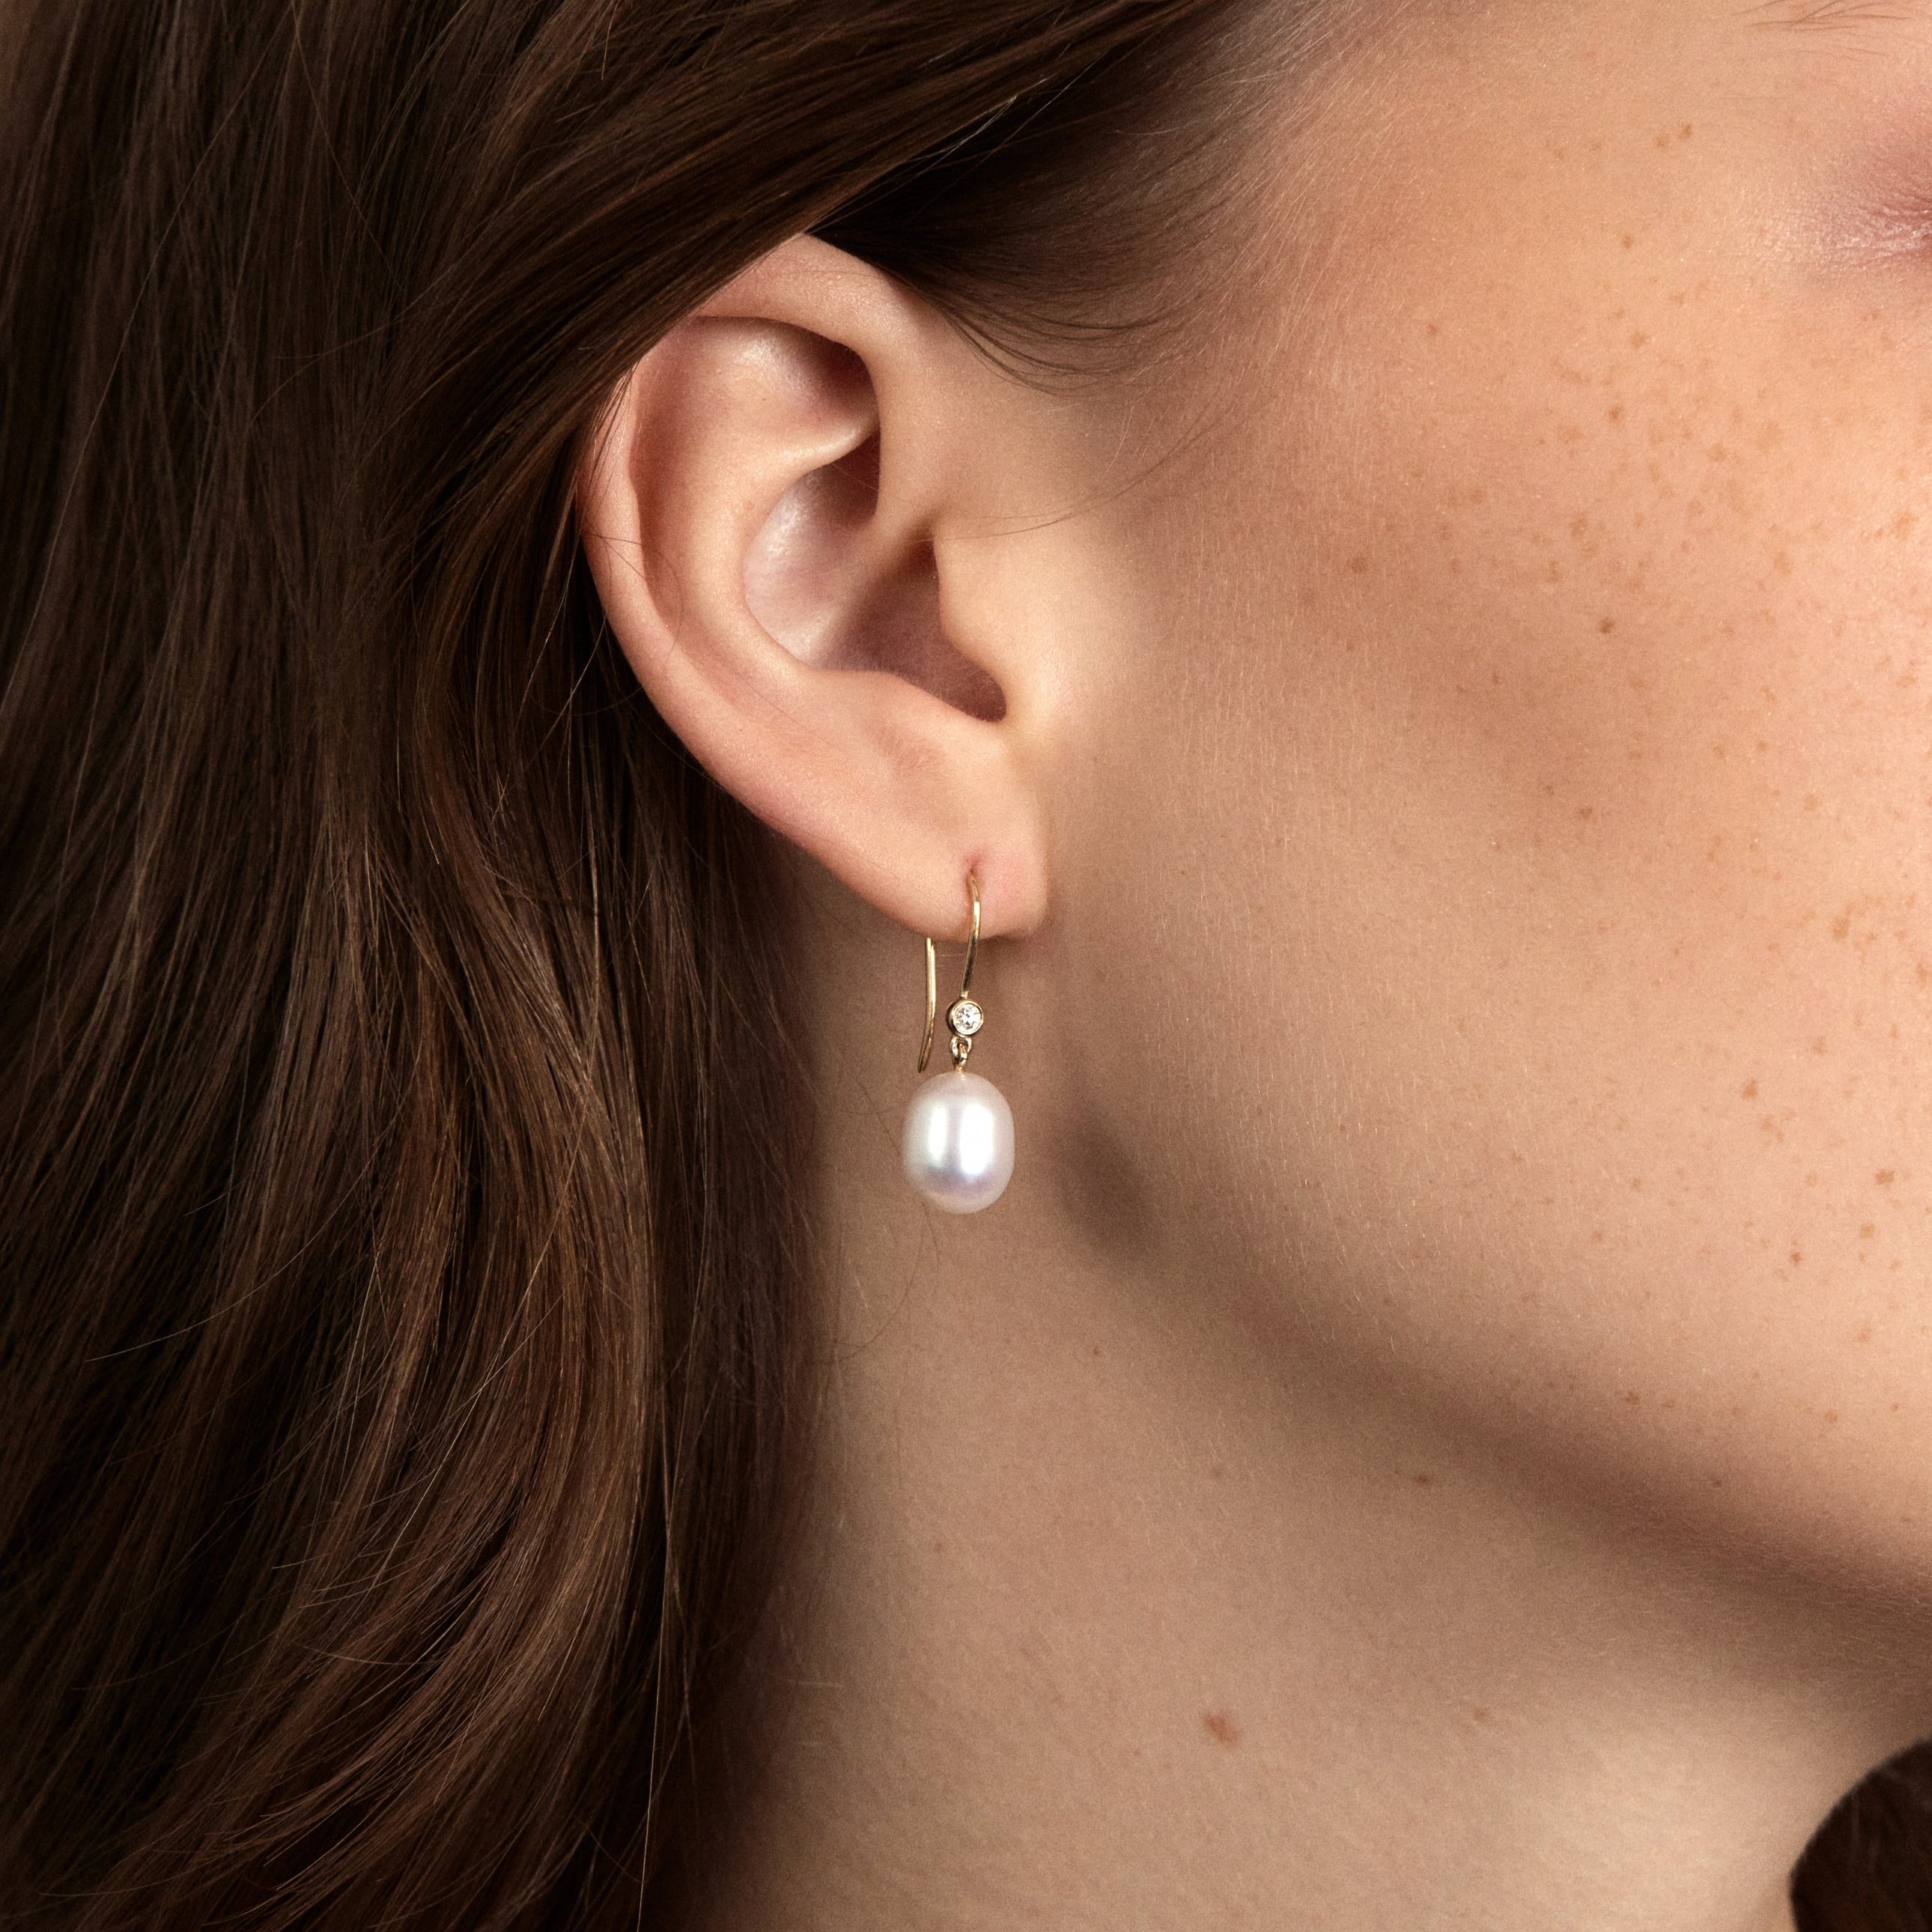 Baroque pearl and Diamond Earrings